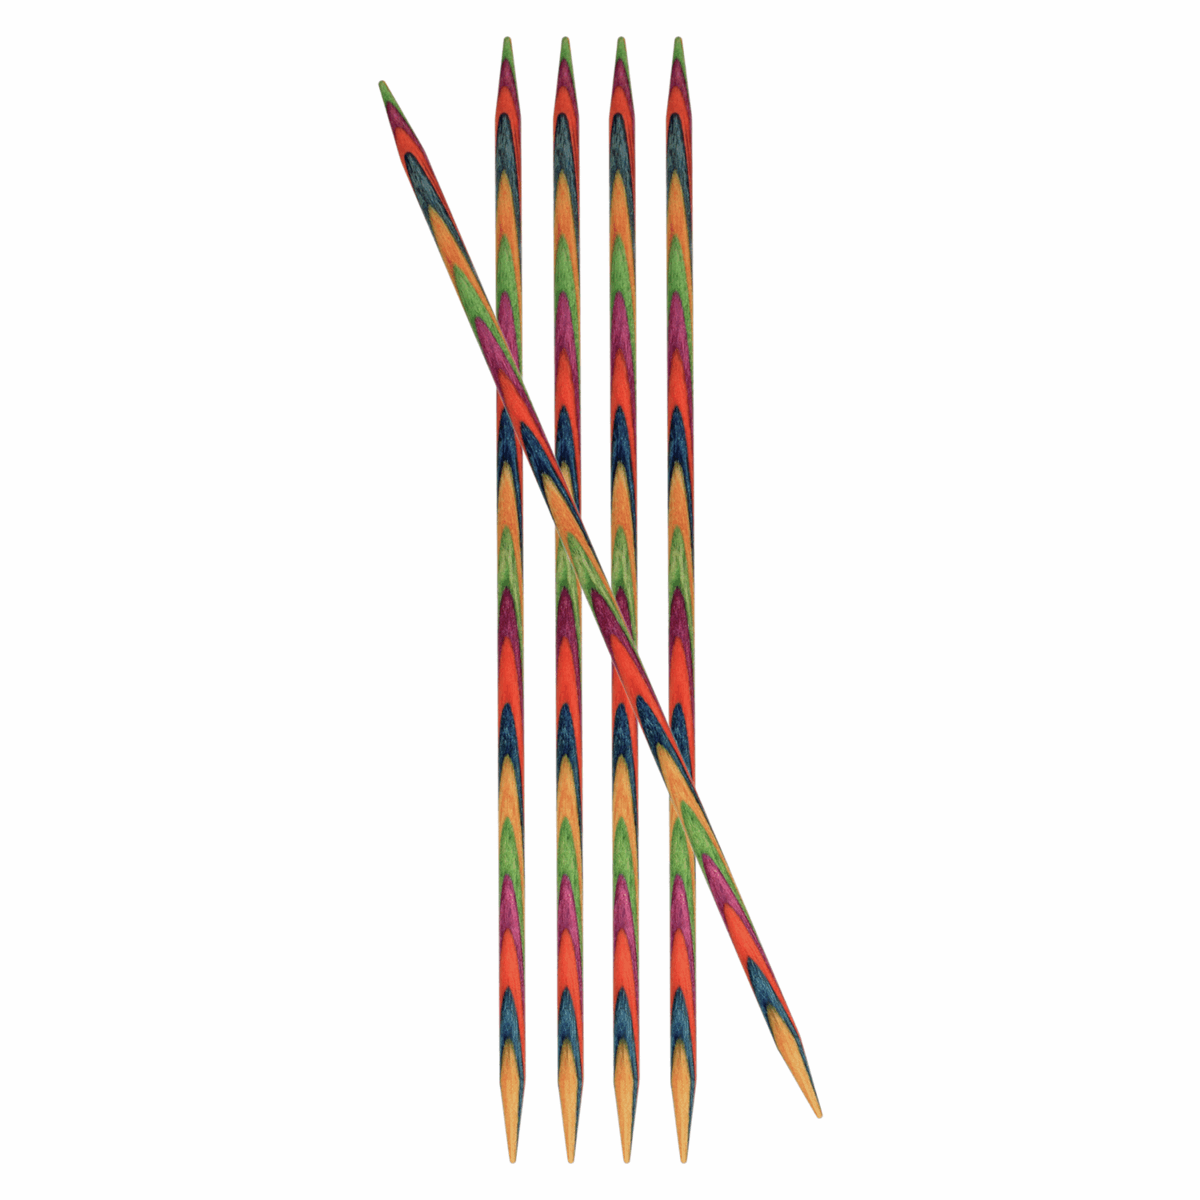 KnitPro Double Point Knitting Needles (Pack of 5) - Symfonie - 20cm